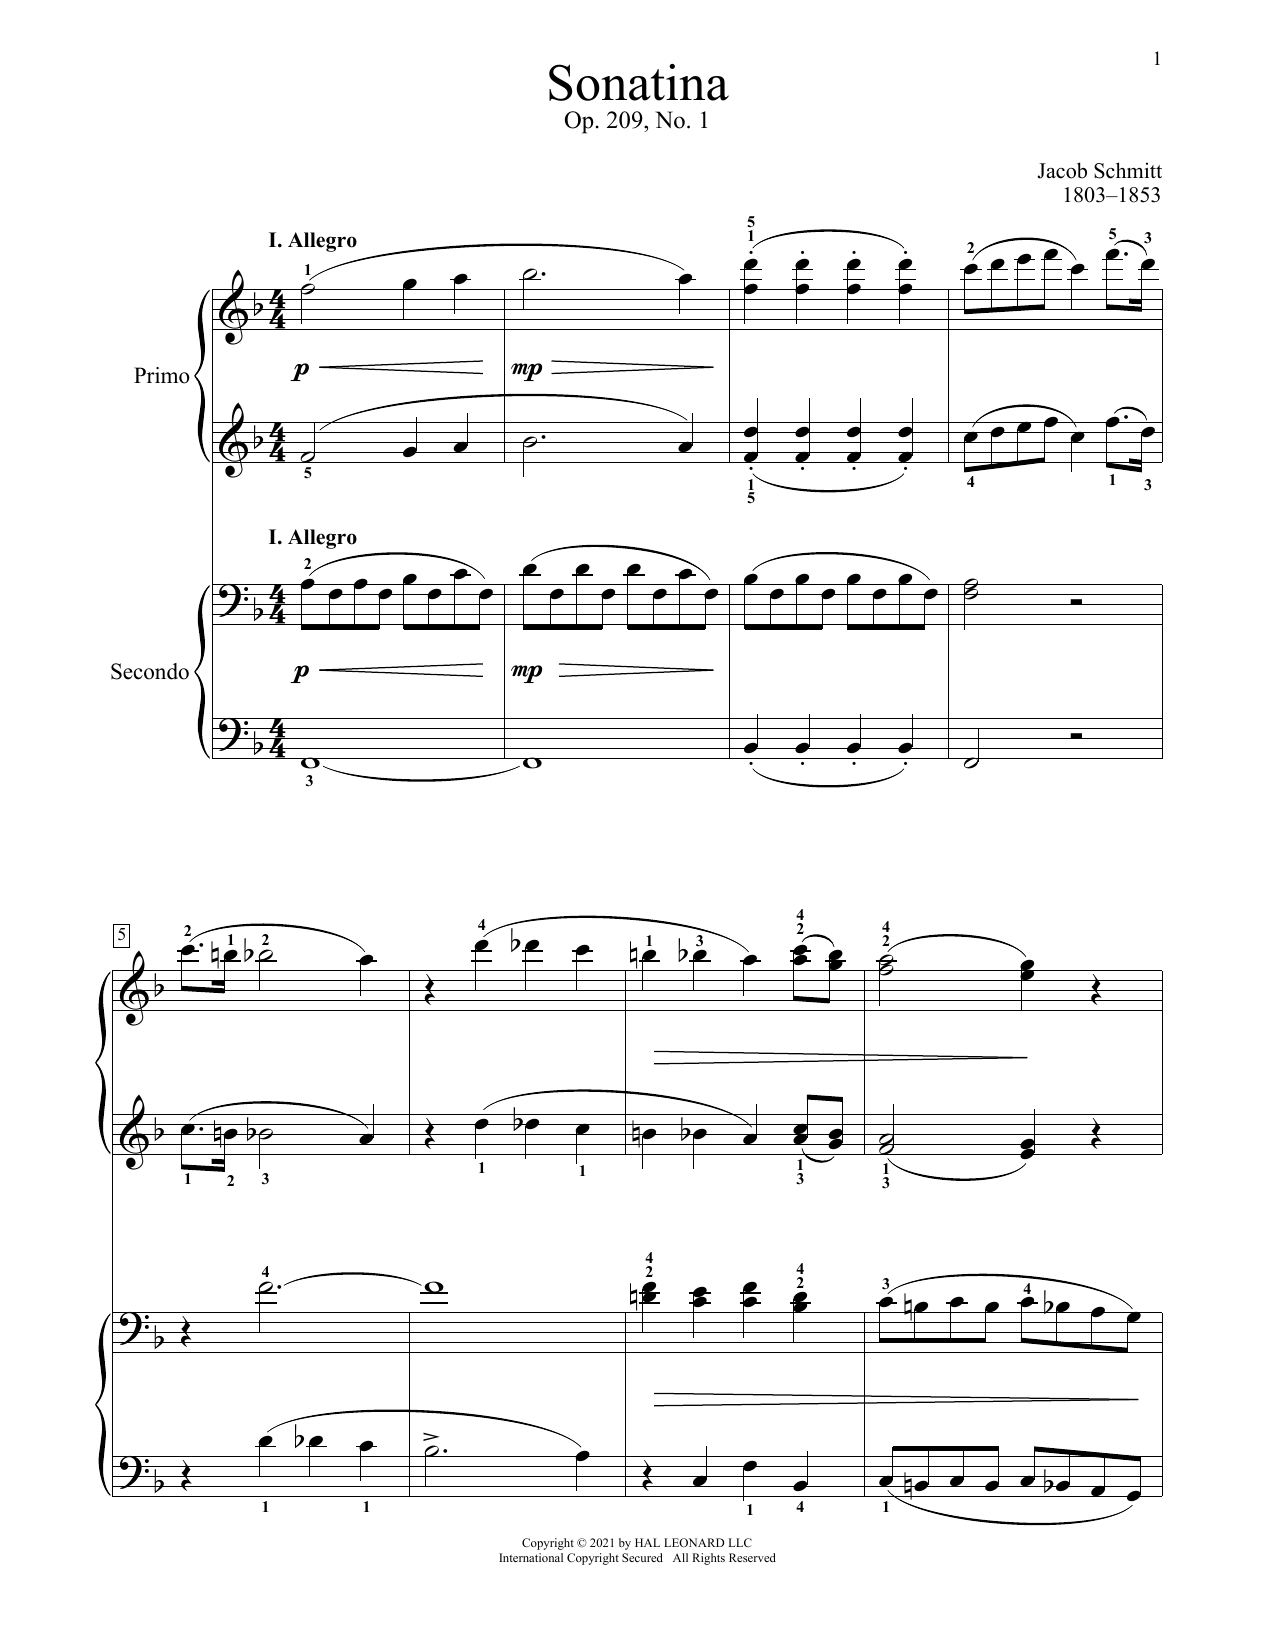 Jacob Schmitt Sonatina, Op. 209, No. 1, I. Allegro sheet music notes and chords arranged for Piano Duet